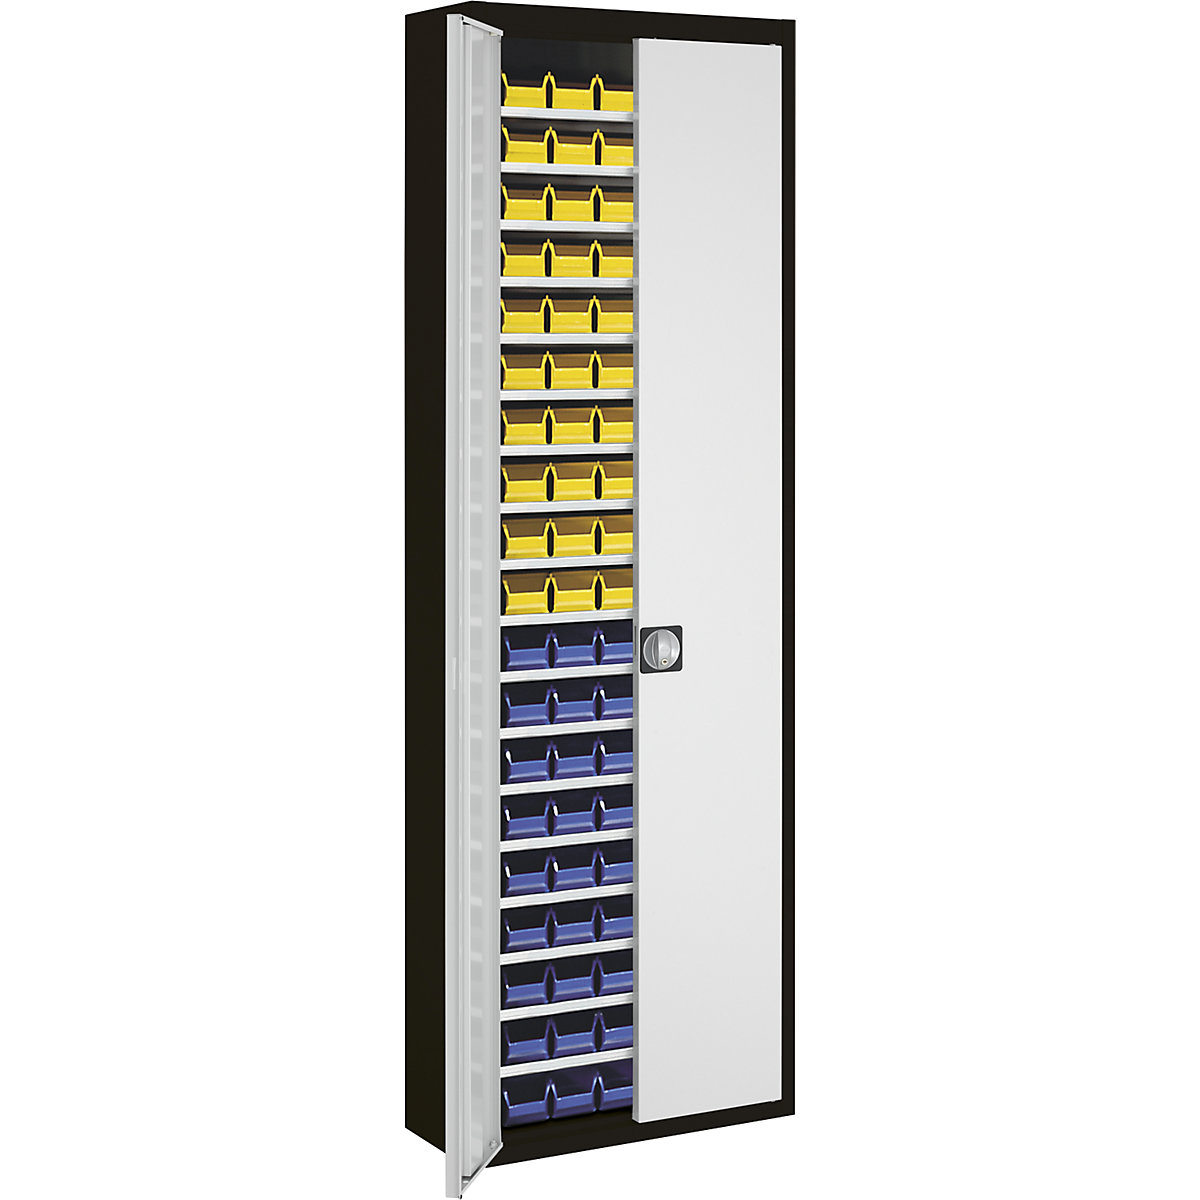 Storage cupboard with open fronted storage bins – mauser, HxWxD 2150 x 680 x 280 mm, two-colour, black body, grey doors, 114 bins-11